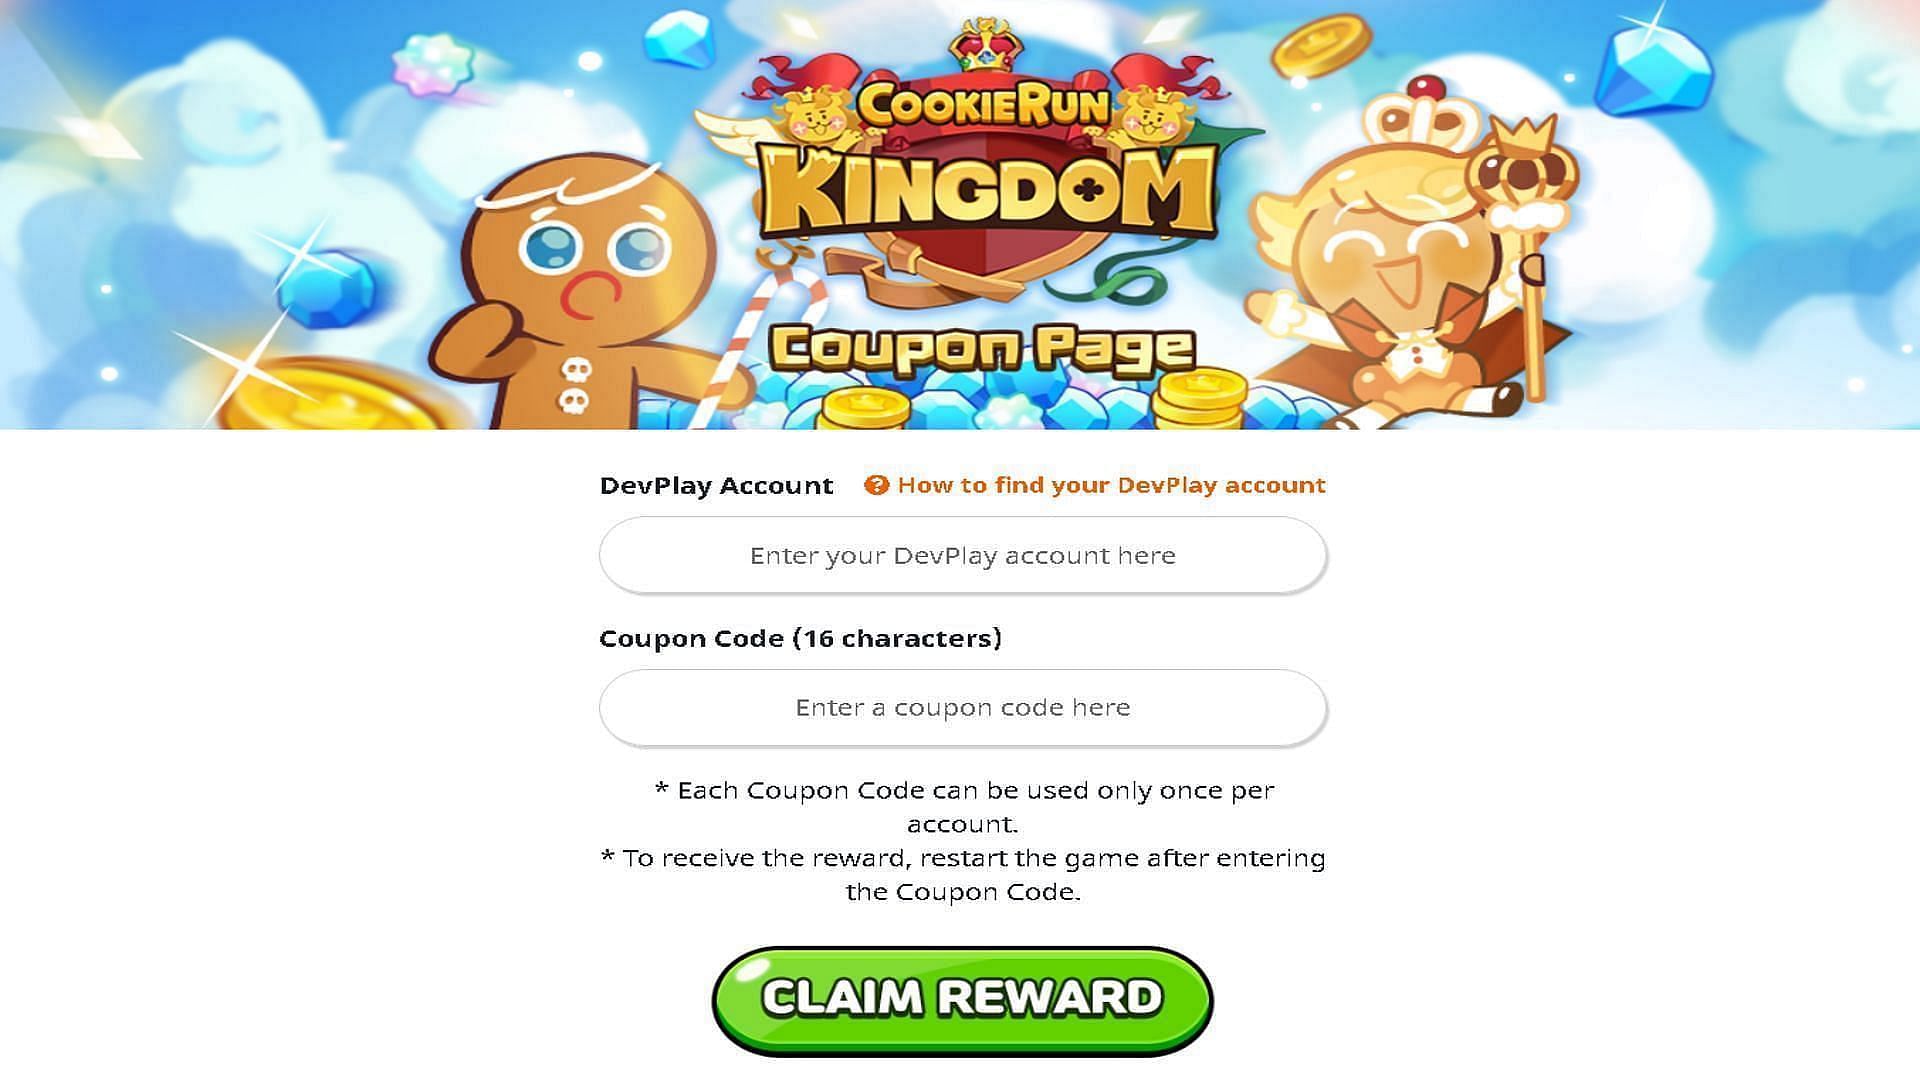 List of Cookie Run: Kingdom redeem codes (January 17, 2021)